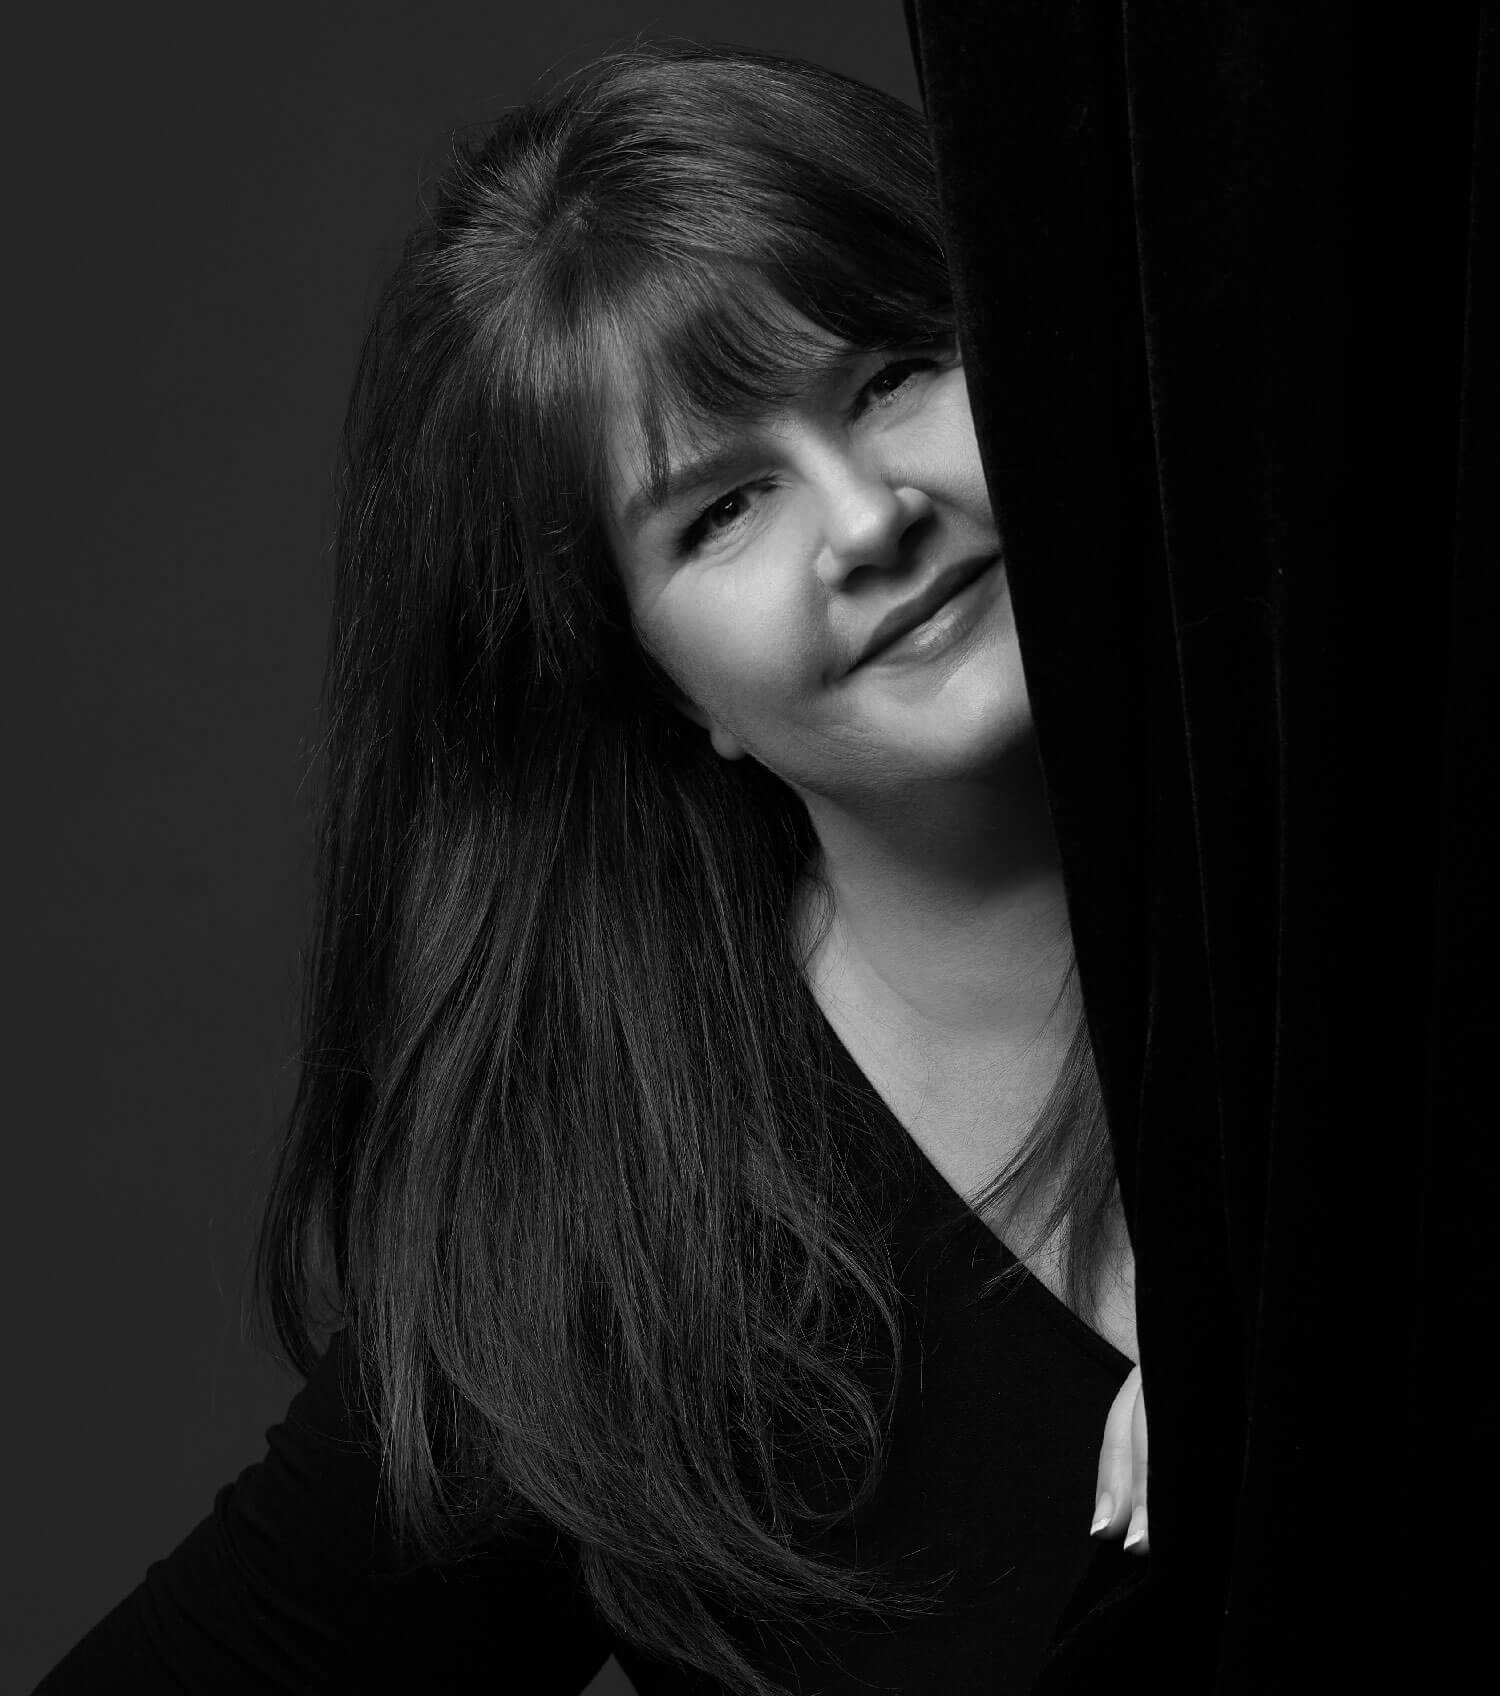 Lisa-Wynn-black-and-white-image-peeking-out